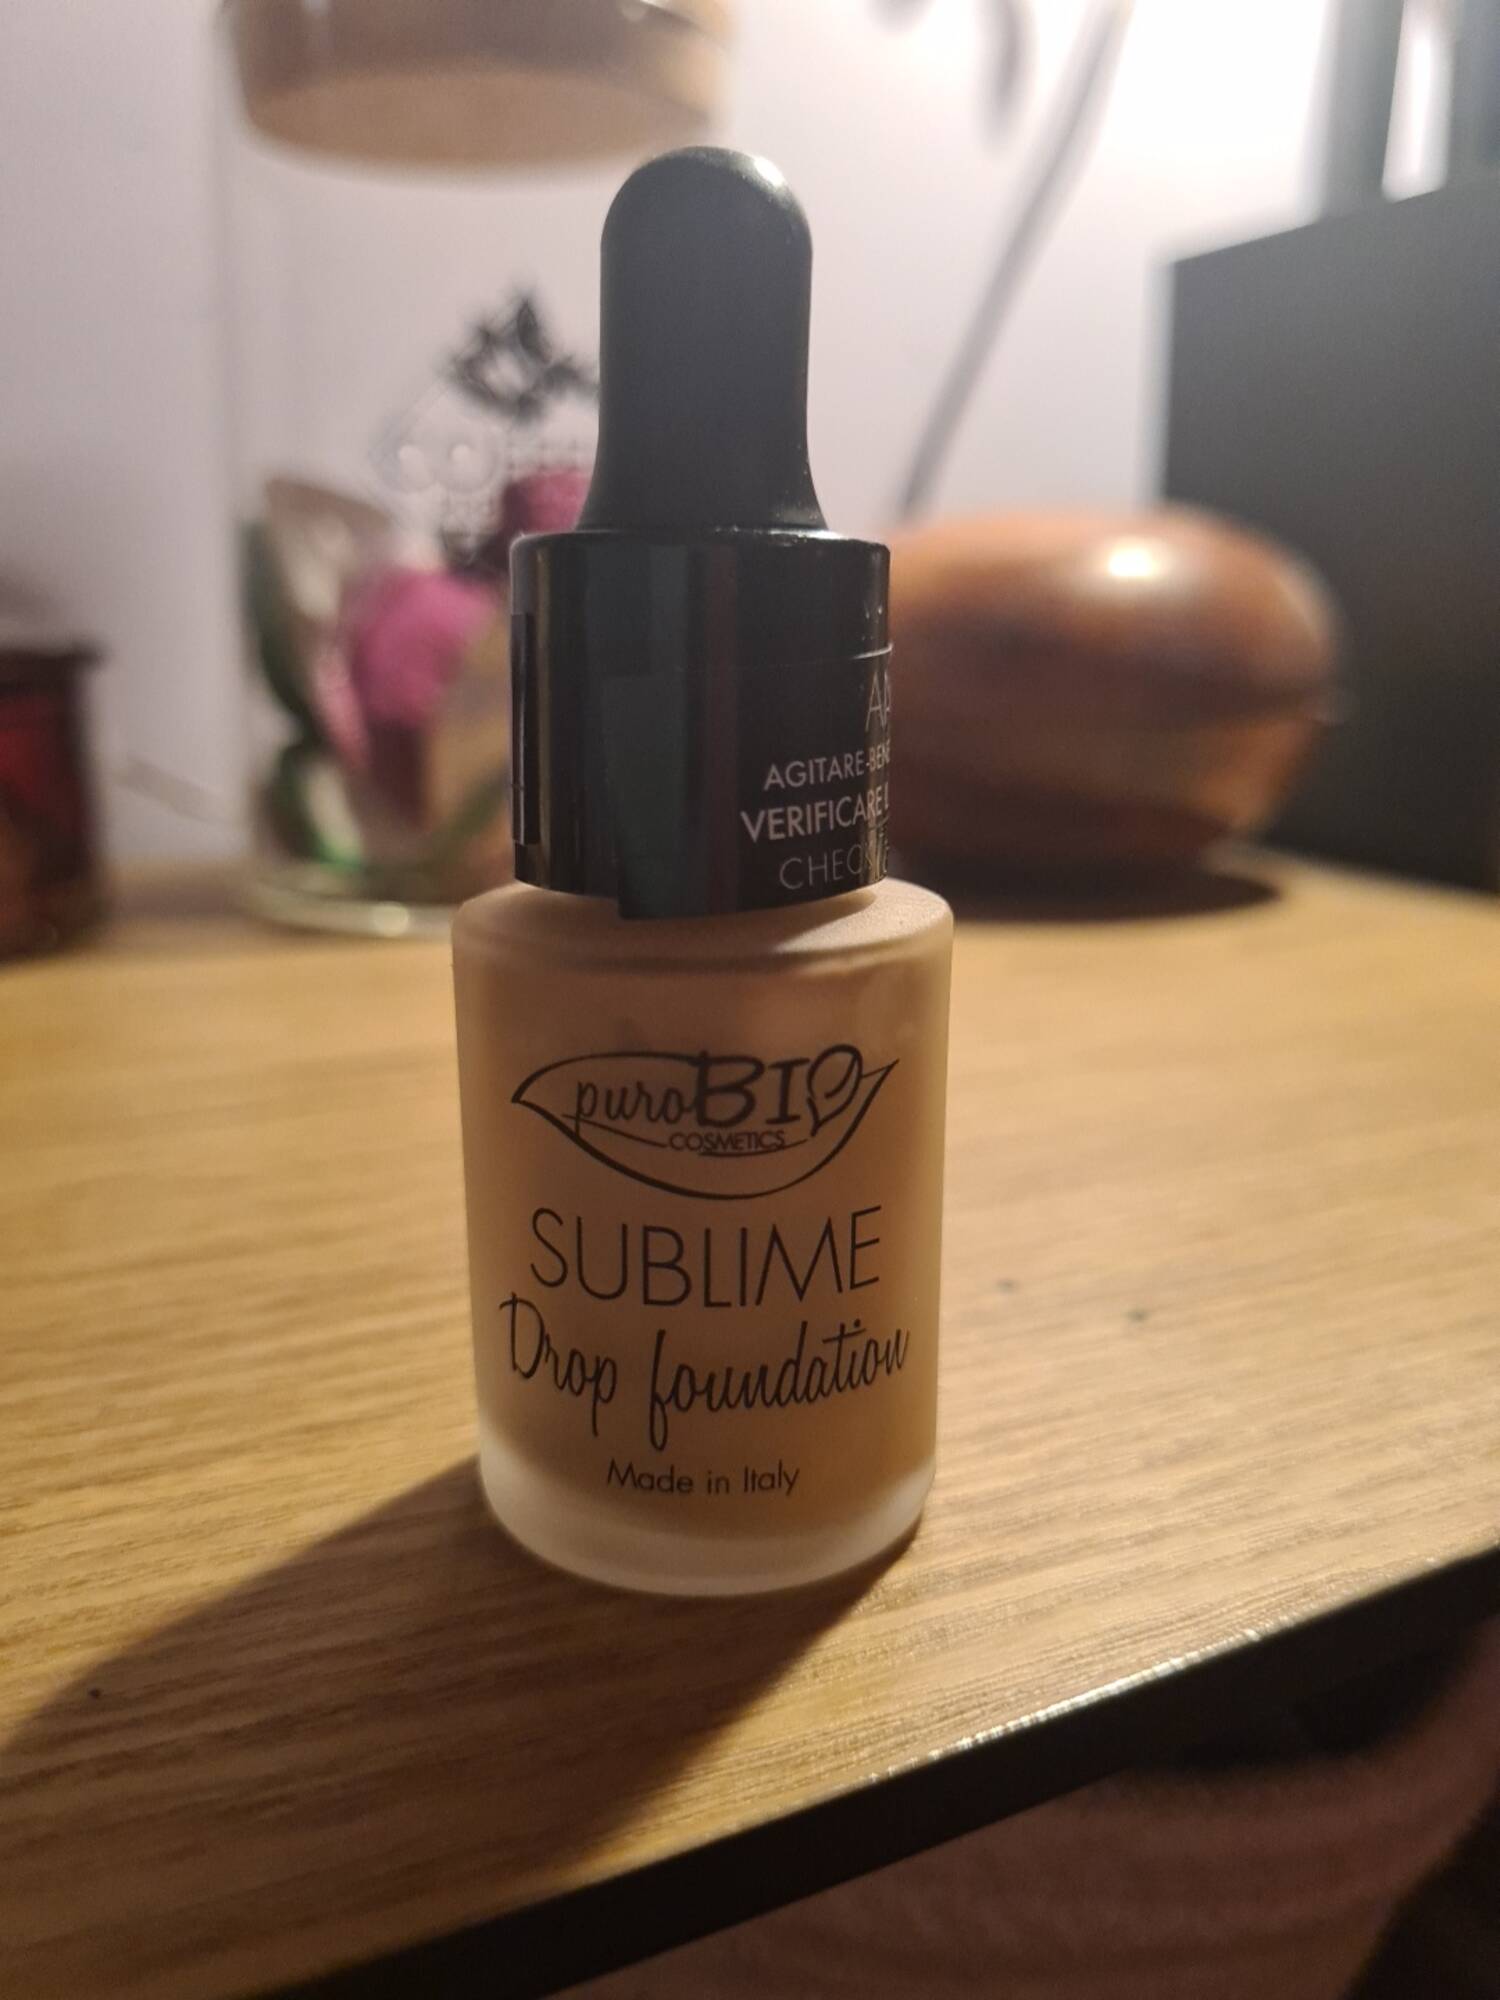 PUROBIO - Sublime - Drop foundation